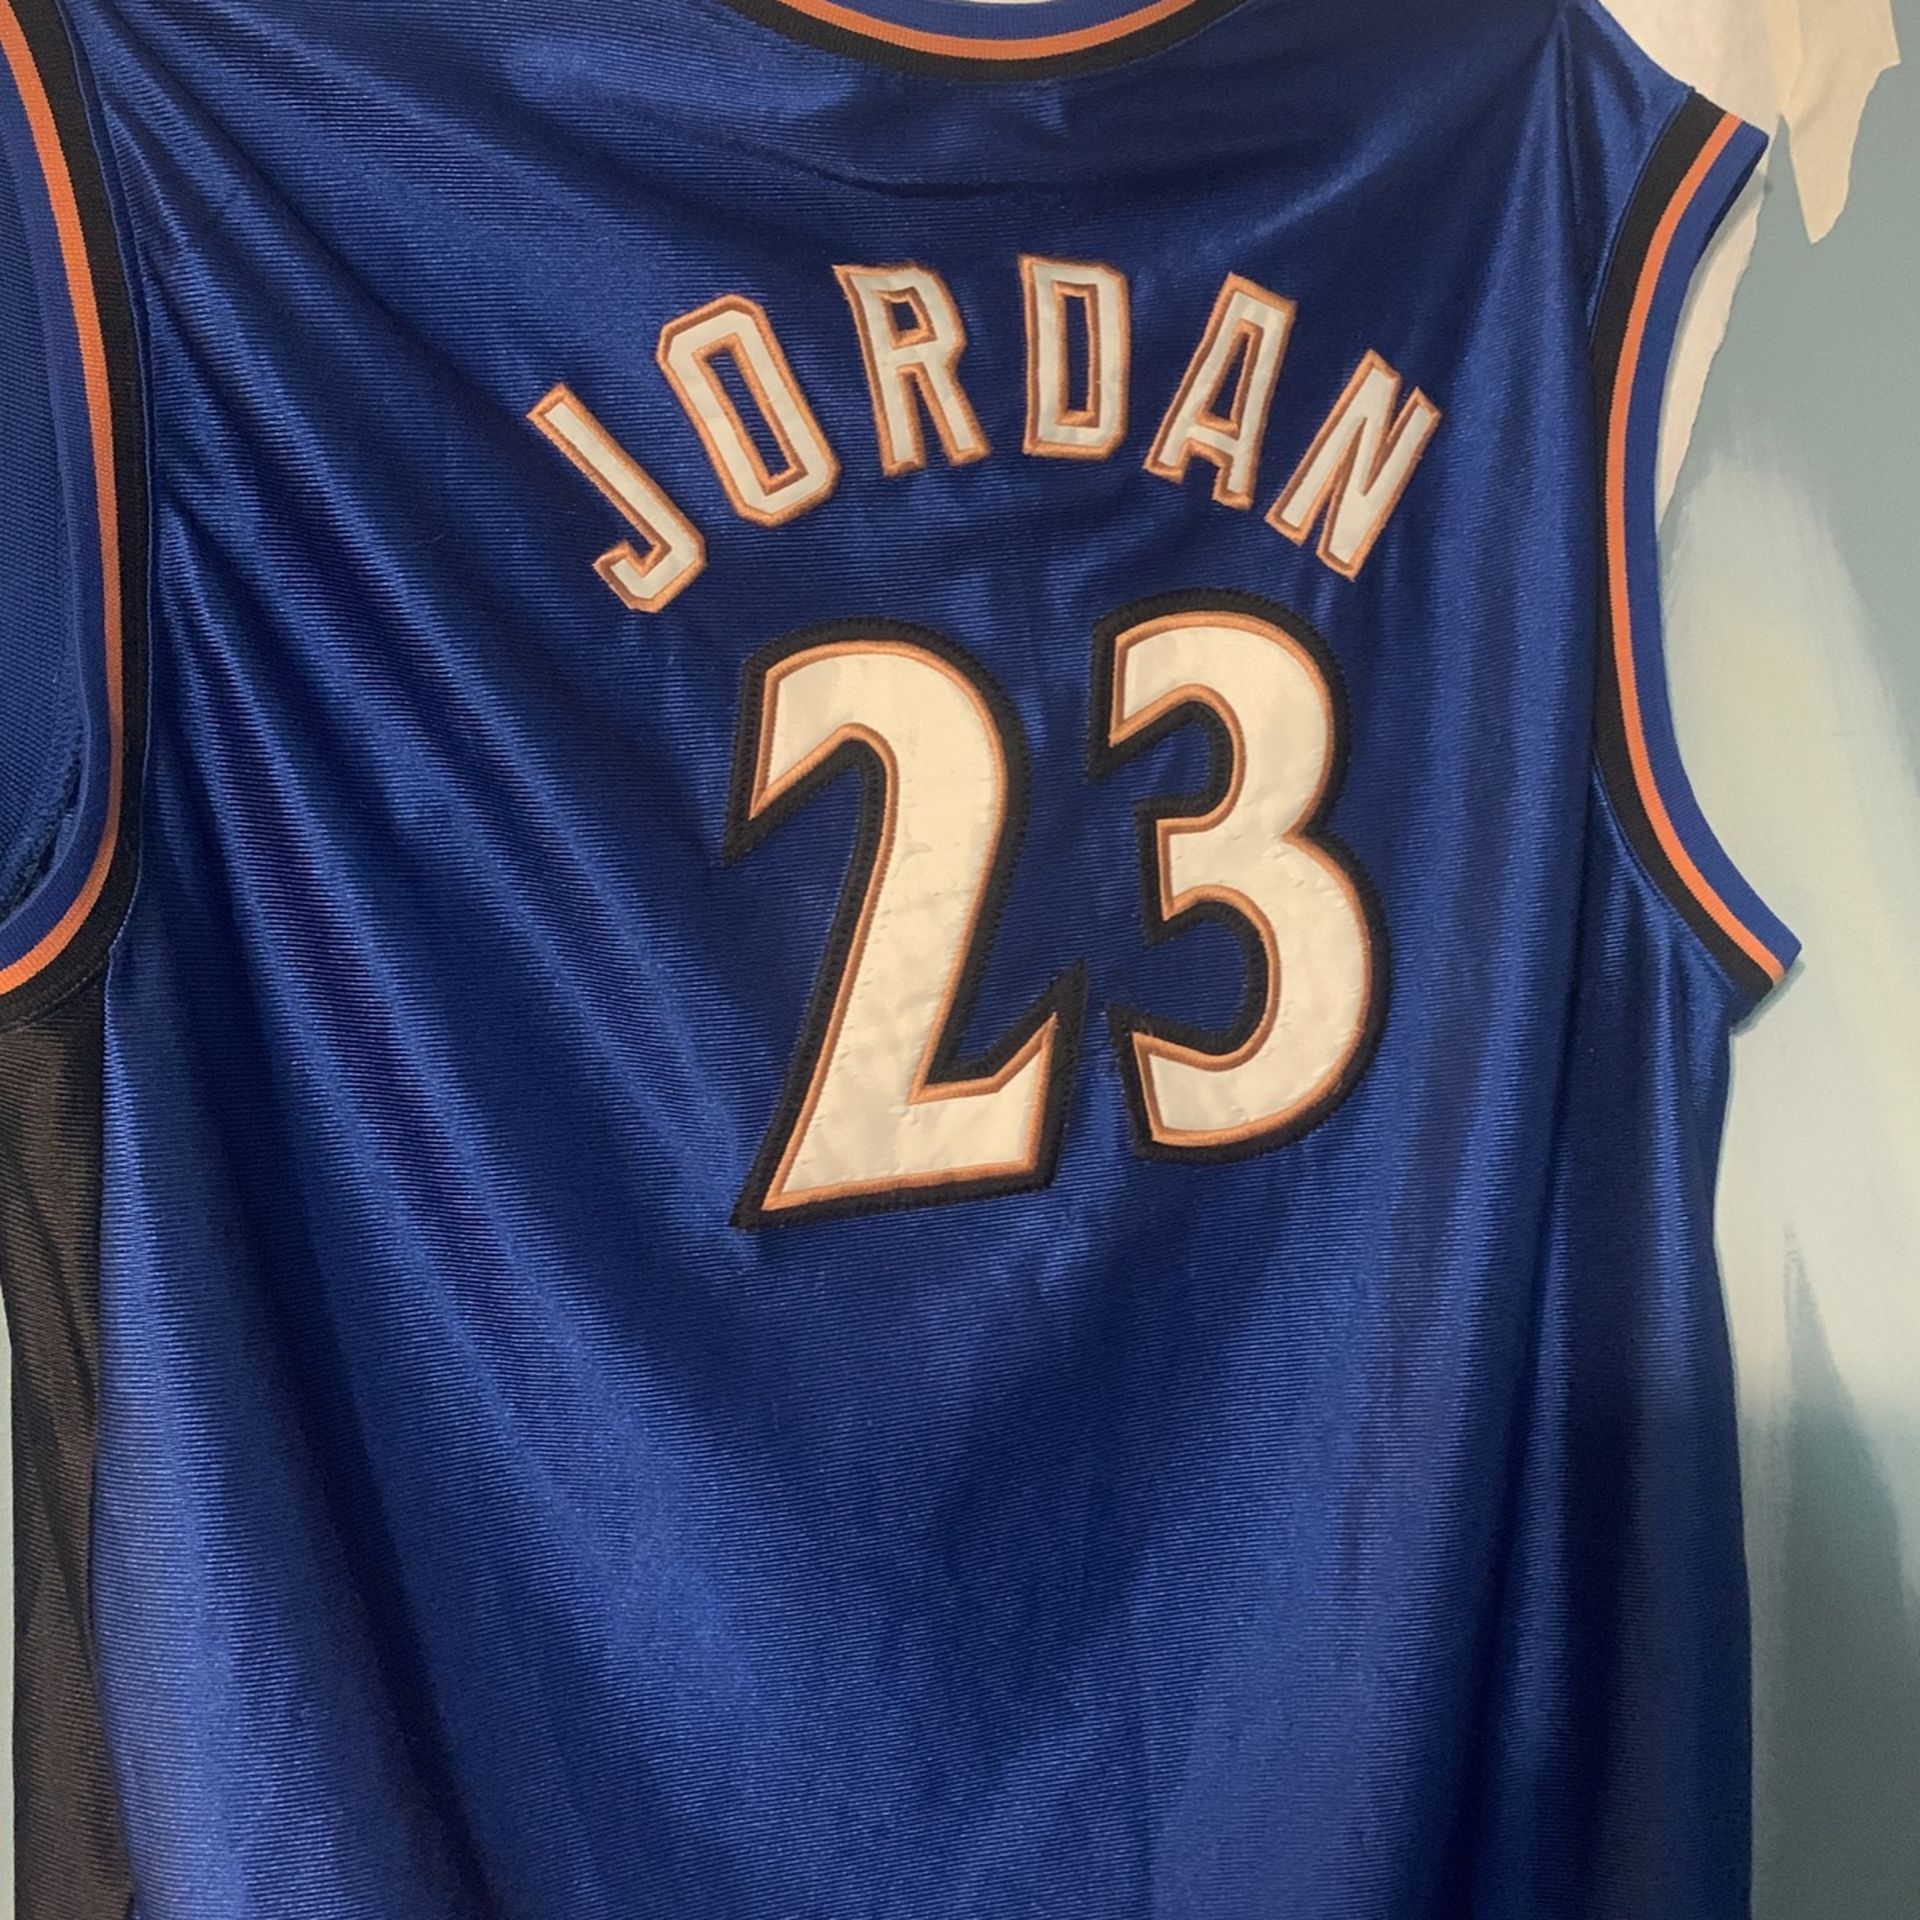 Jordan Wizards Jersey XL